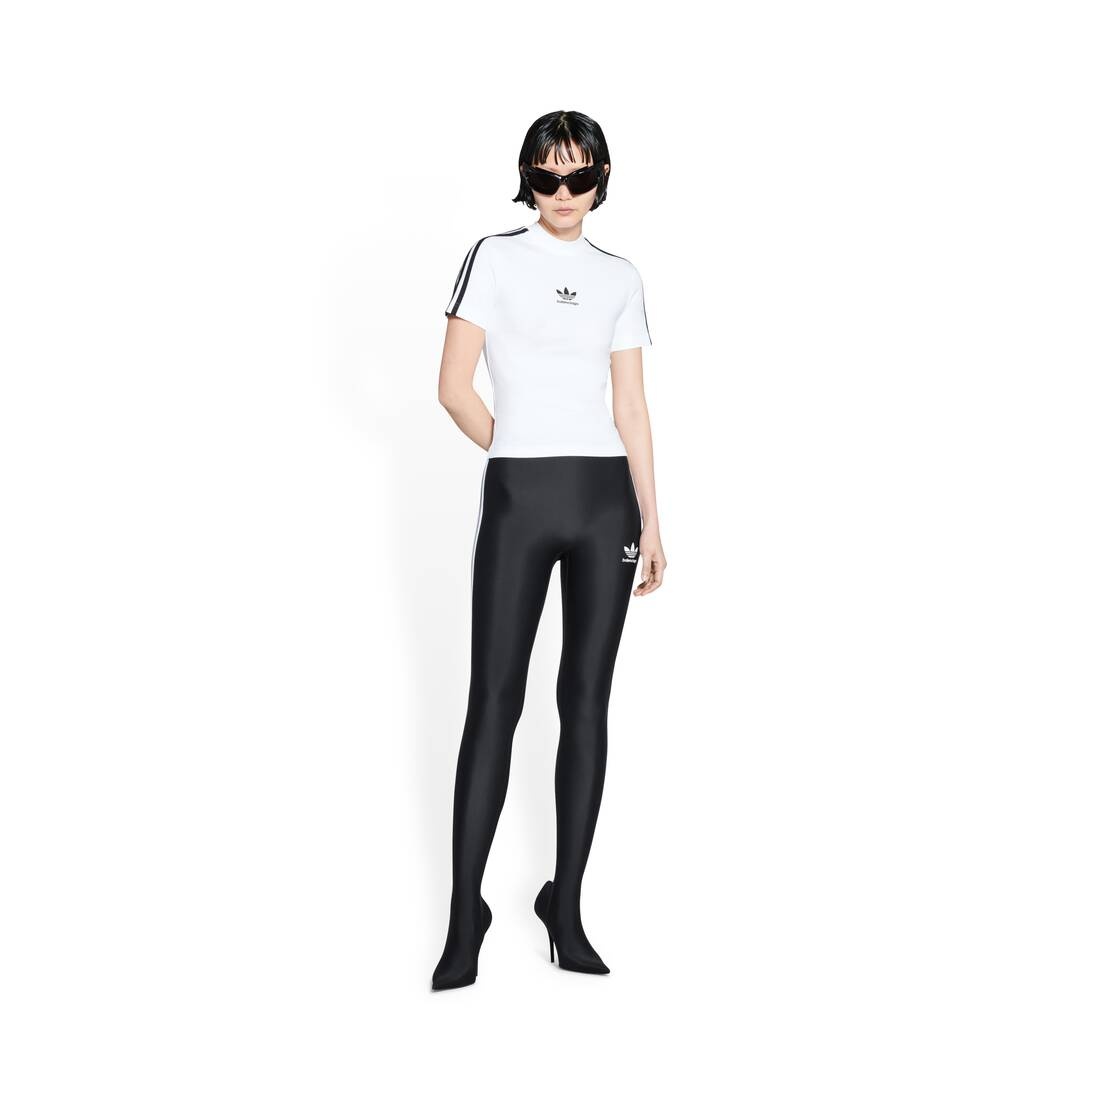 Balenciaga Adidas Striped Printed Stretch-cotton Jersey T-Shirt - Women - White Tops - S